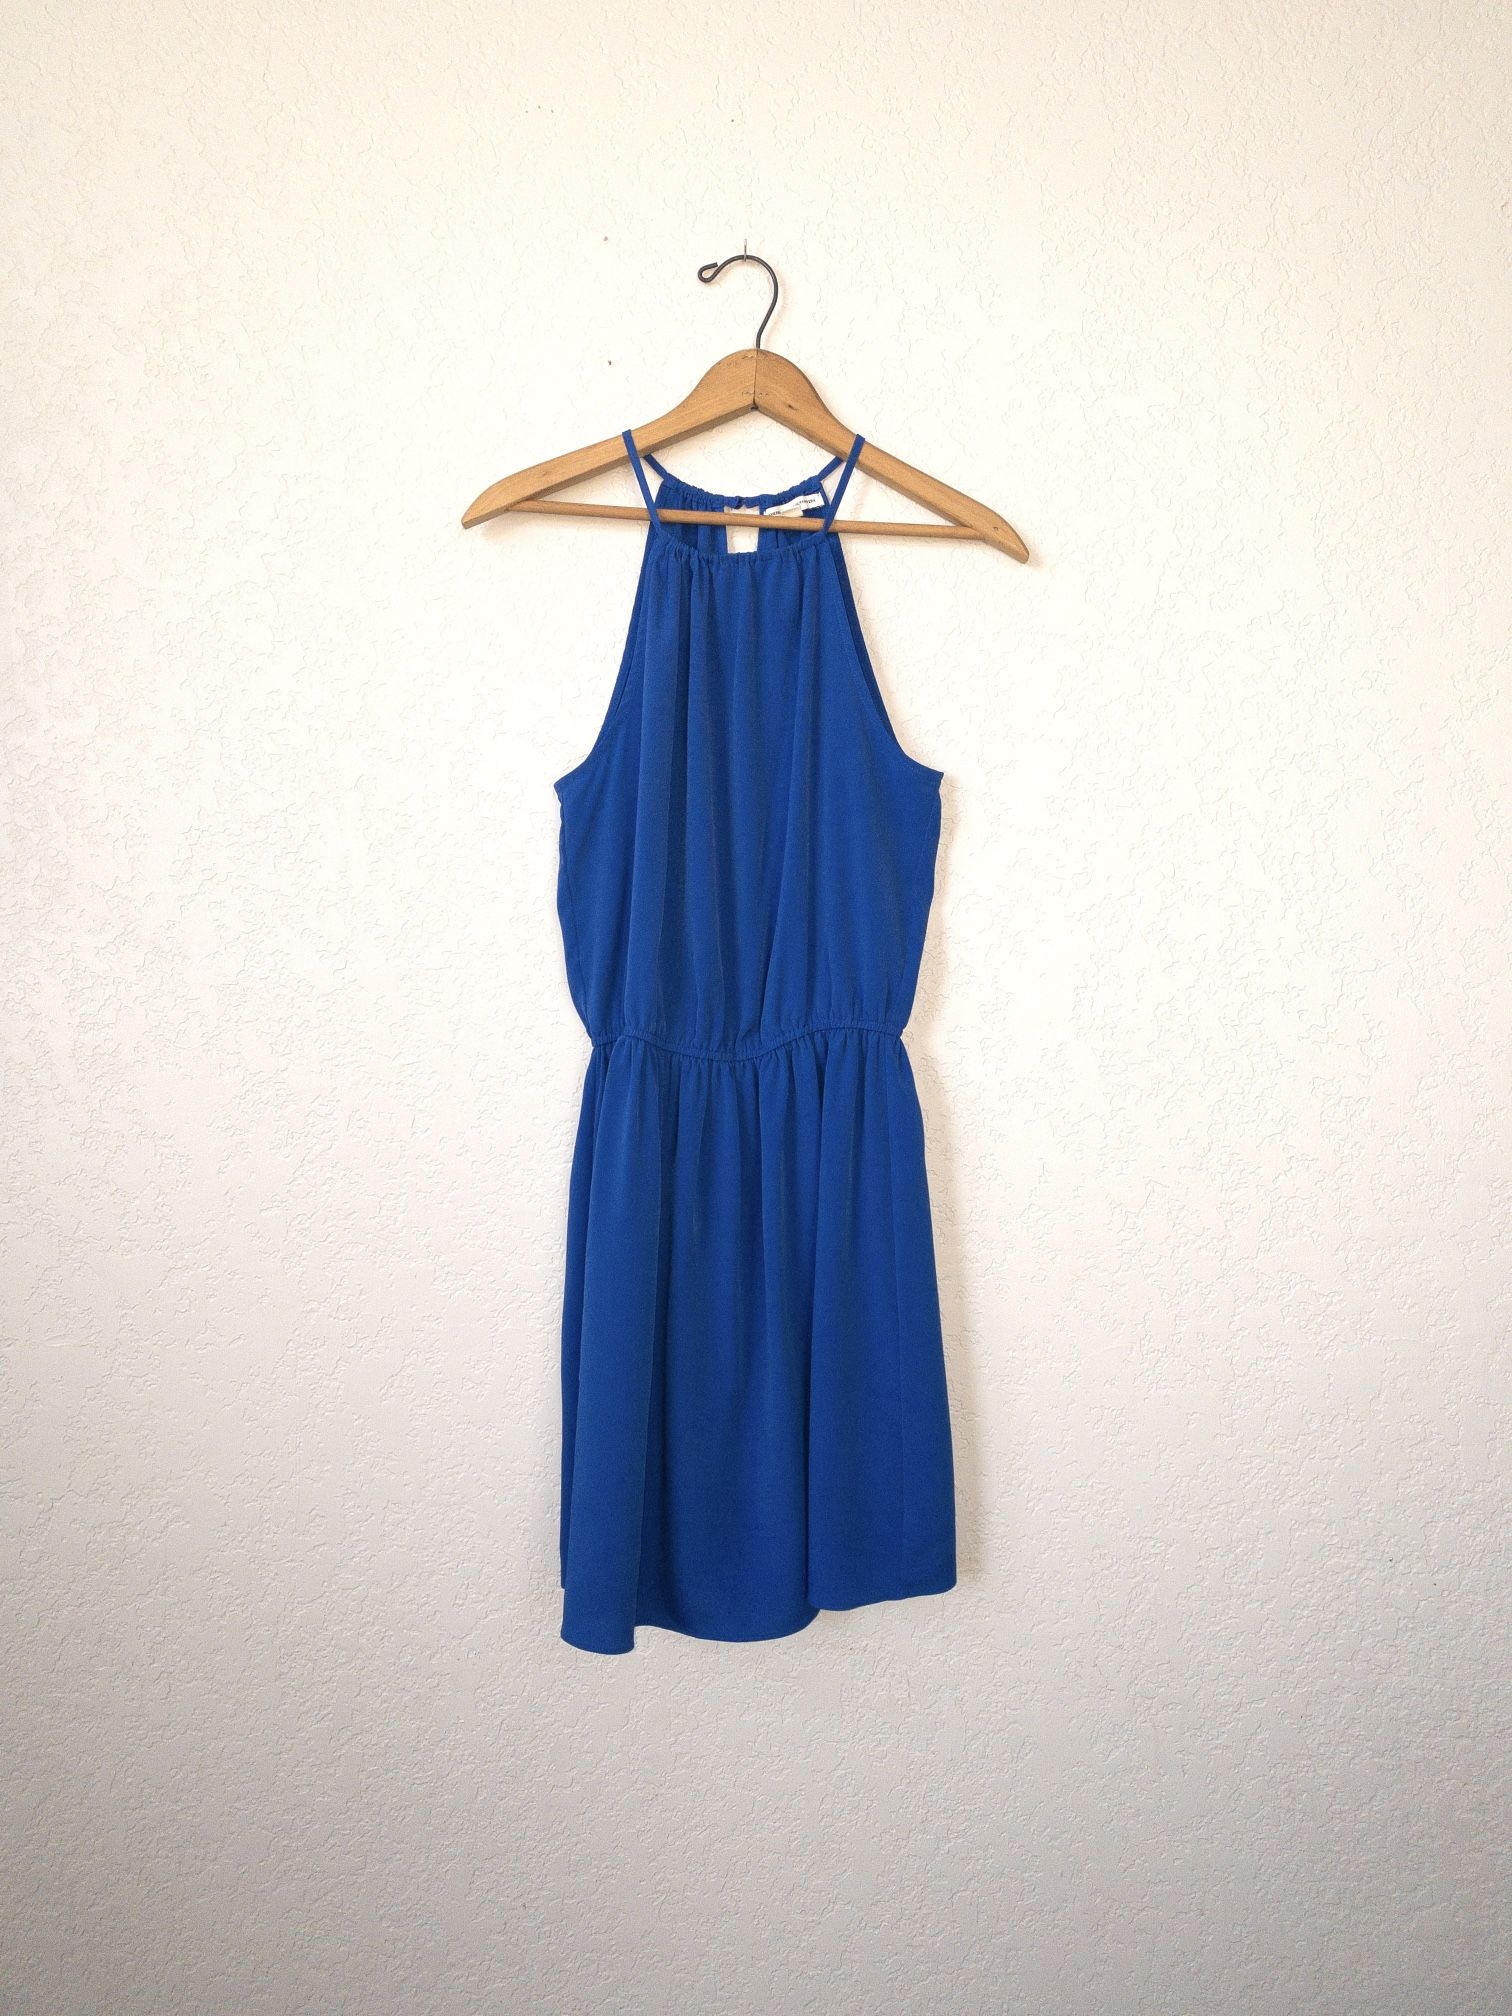 American Eagle Blue Dress